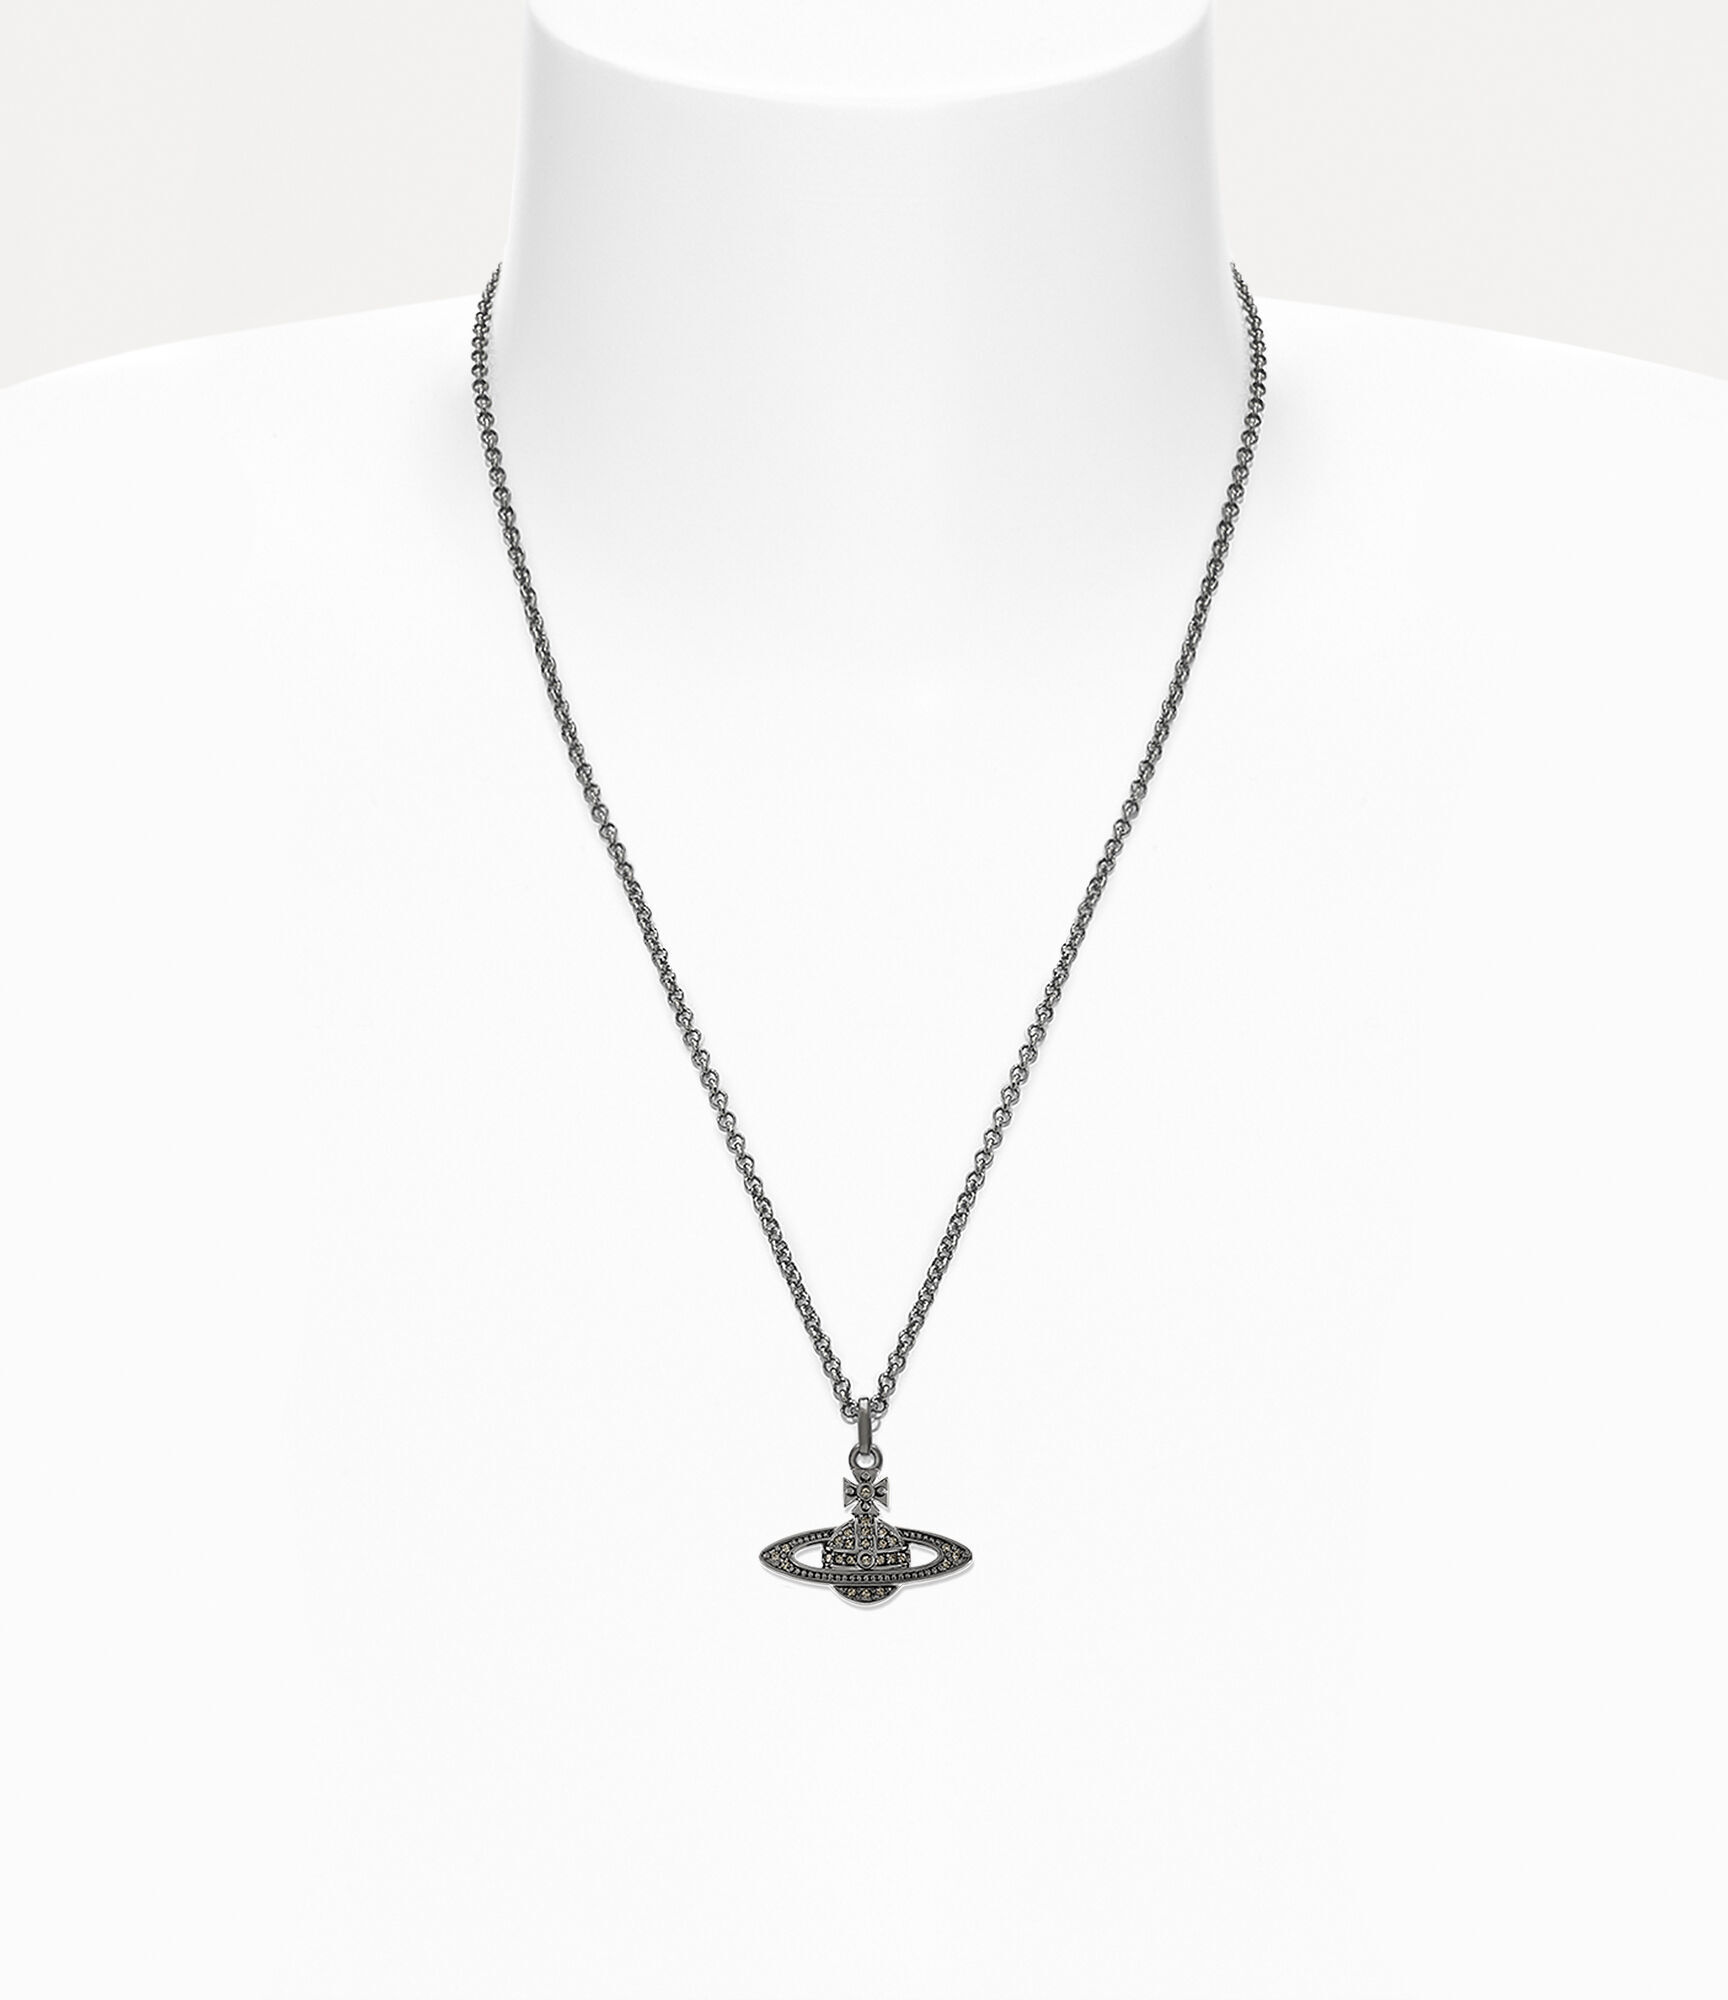 Nana Anime Lighter Necklace Vivienne Westwood Lighter Necklace - Etsy |  Accessories, Anime necklace, Necklace lengths